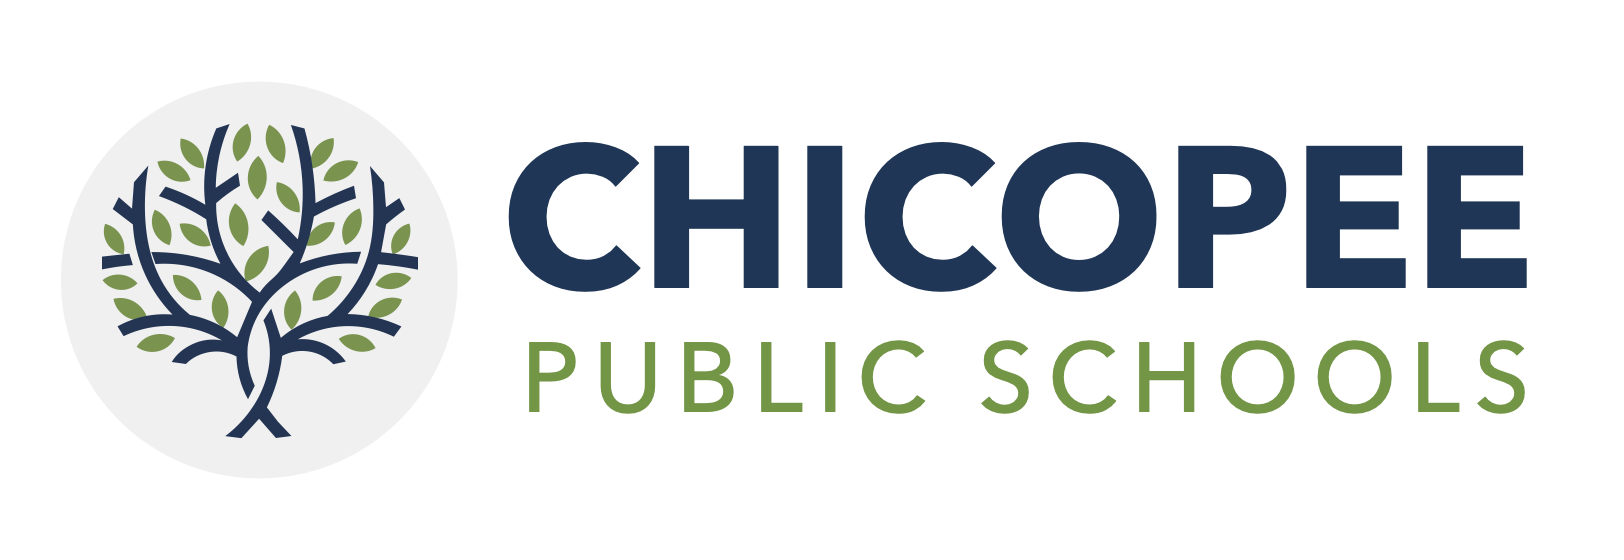 Chicopee Public Schools icon